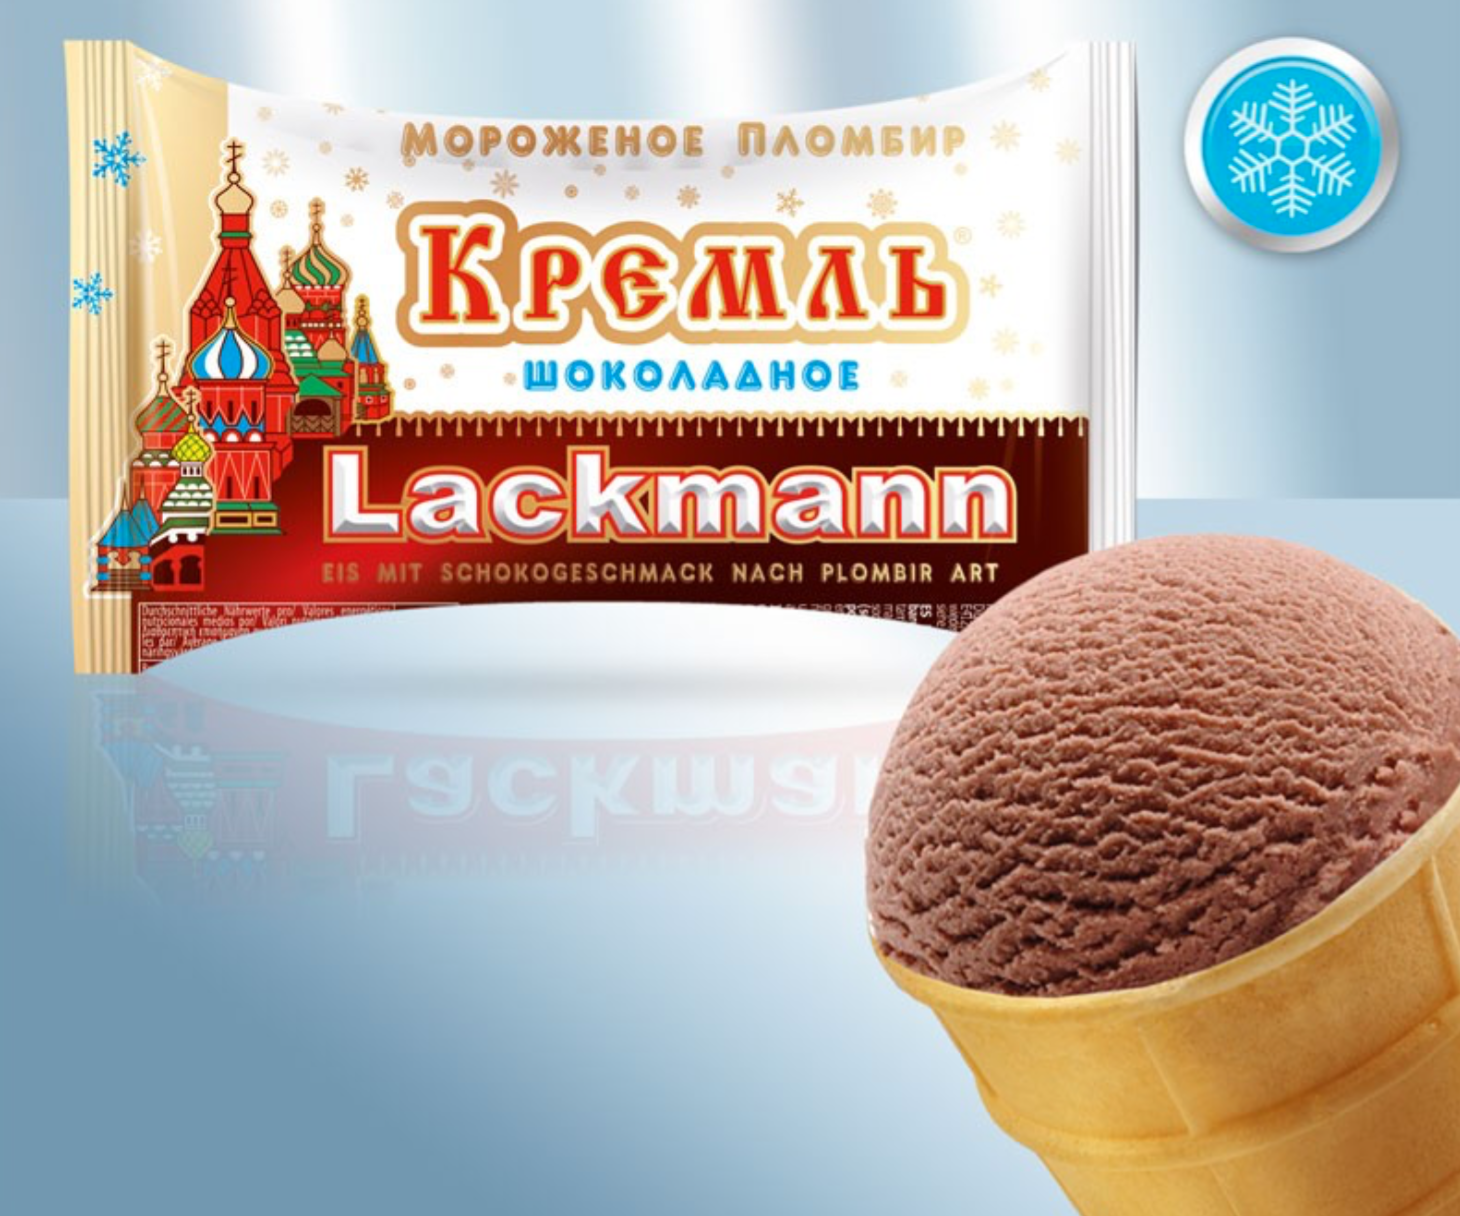 Шоколадный вафельный стаканчик. Шоколадный пломбир. Lackmann пломбир мороженое. Мороженое вафельный стаканчик шоколадный 80г. Кремлевский пломбир.